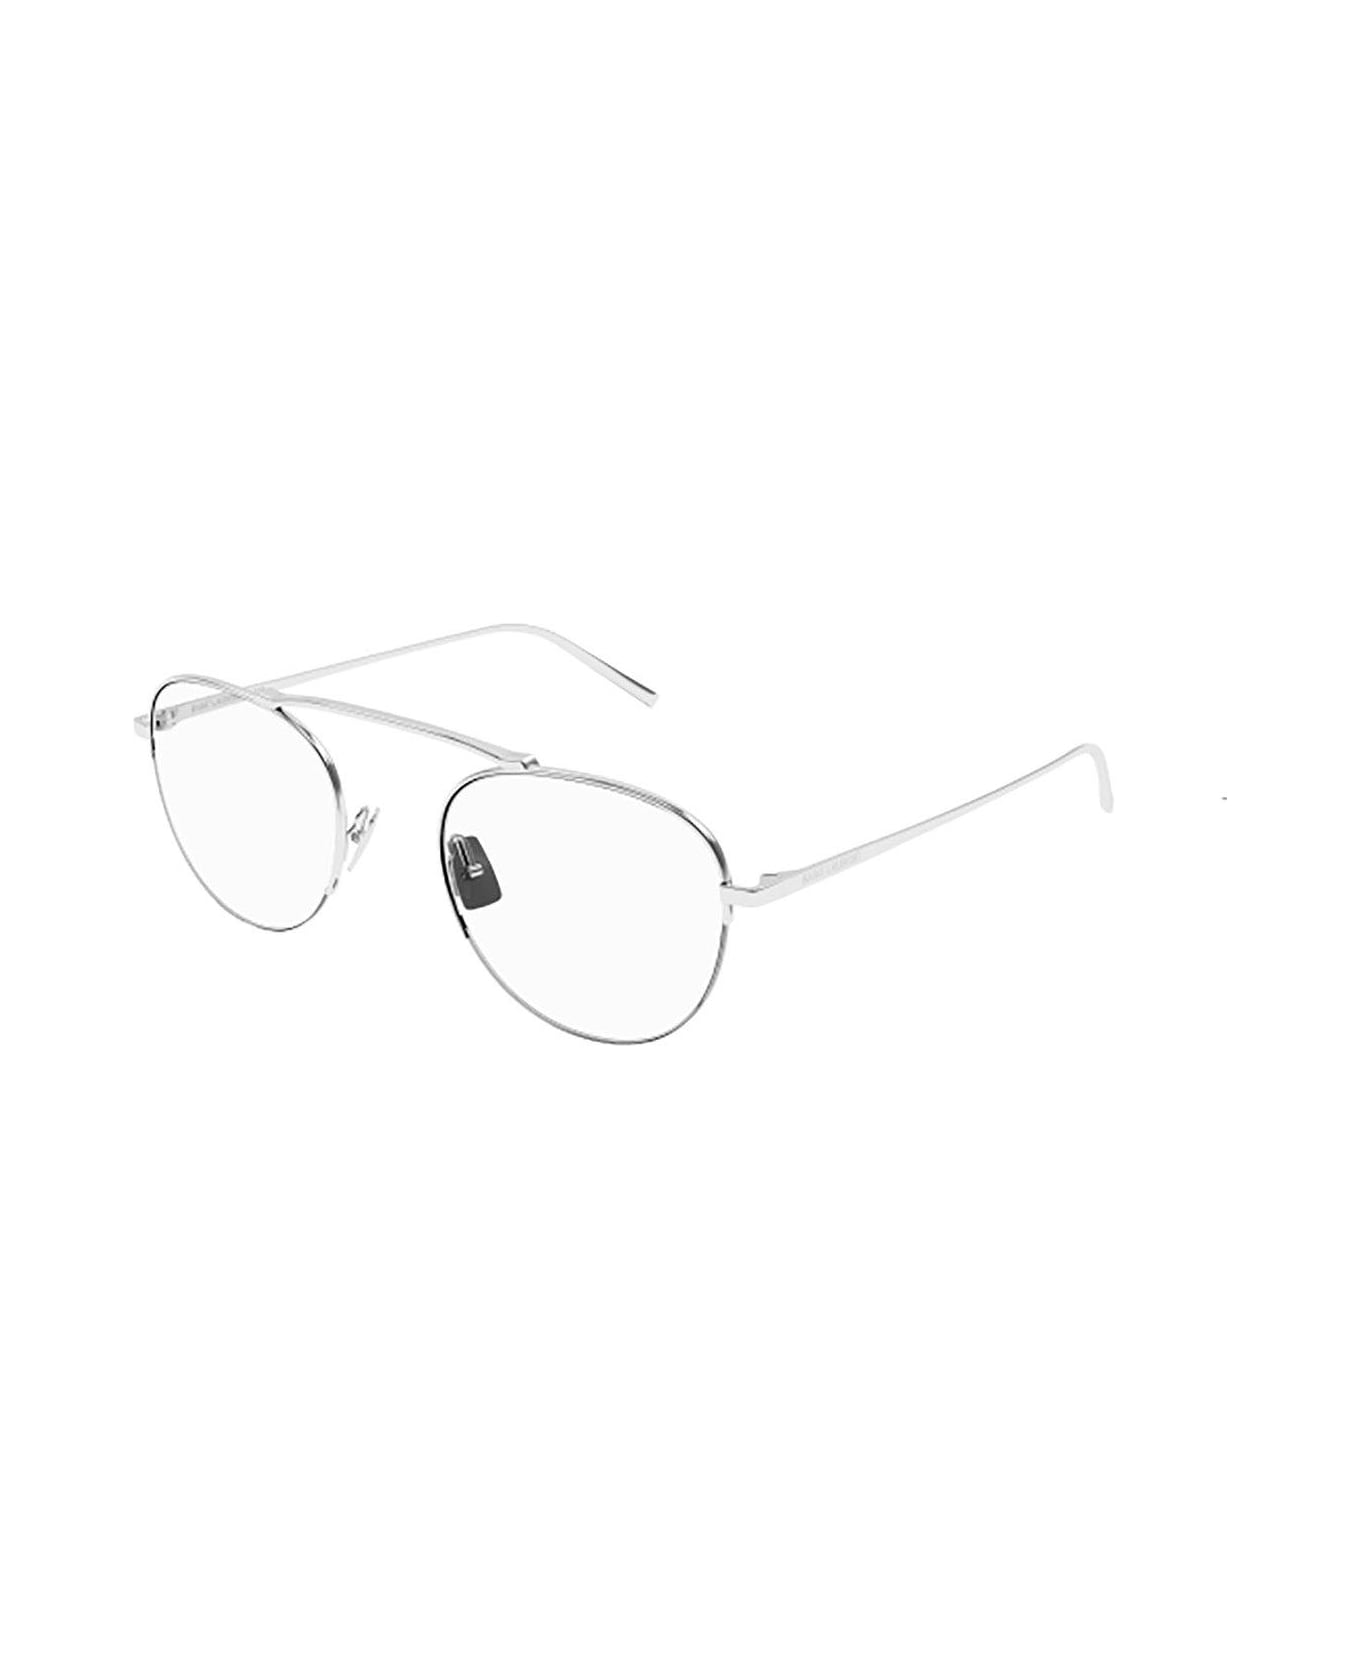 Saint Laurent Eyewear Round Frame Glasses - 001 silver silver transpa